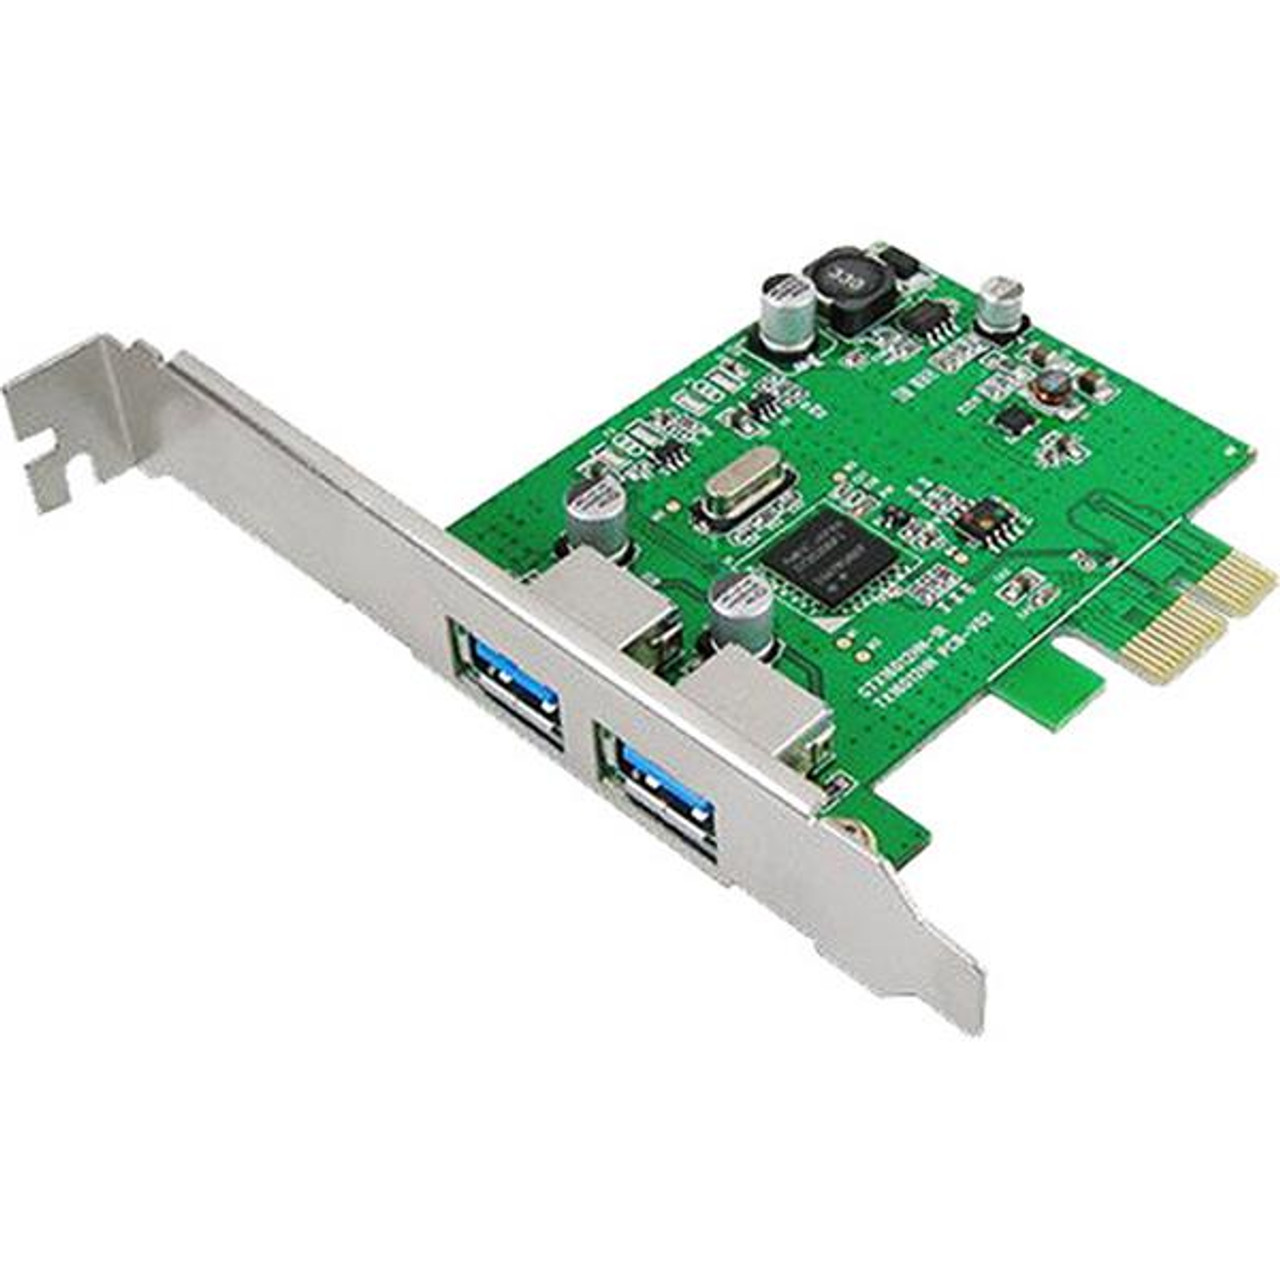 4061-705065-002 StarTech 2-port PCI Express to USB 3.0 Card